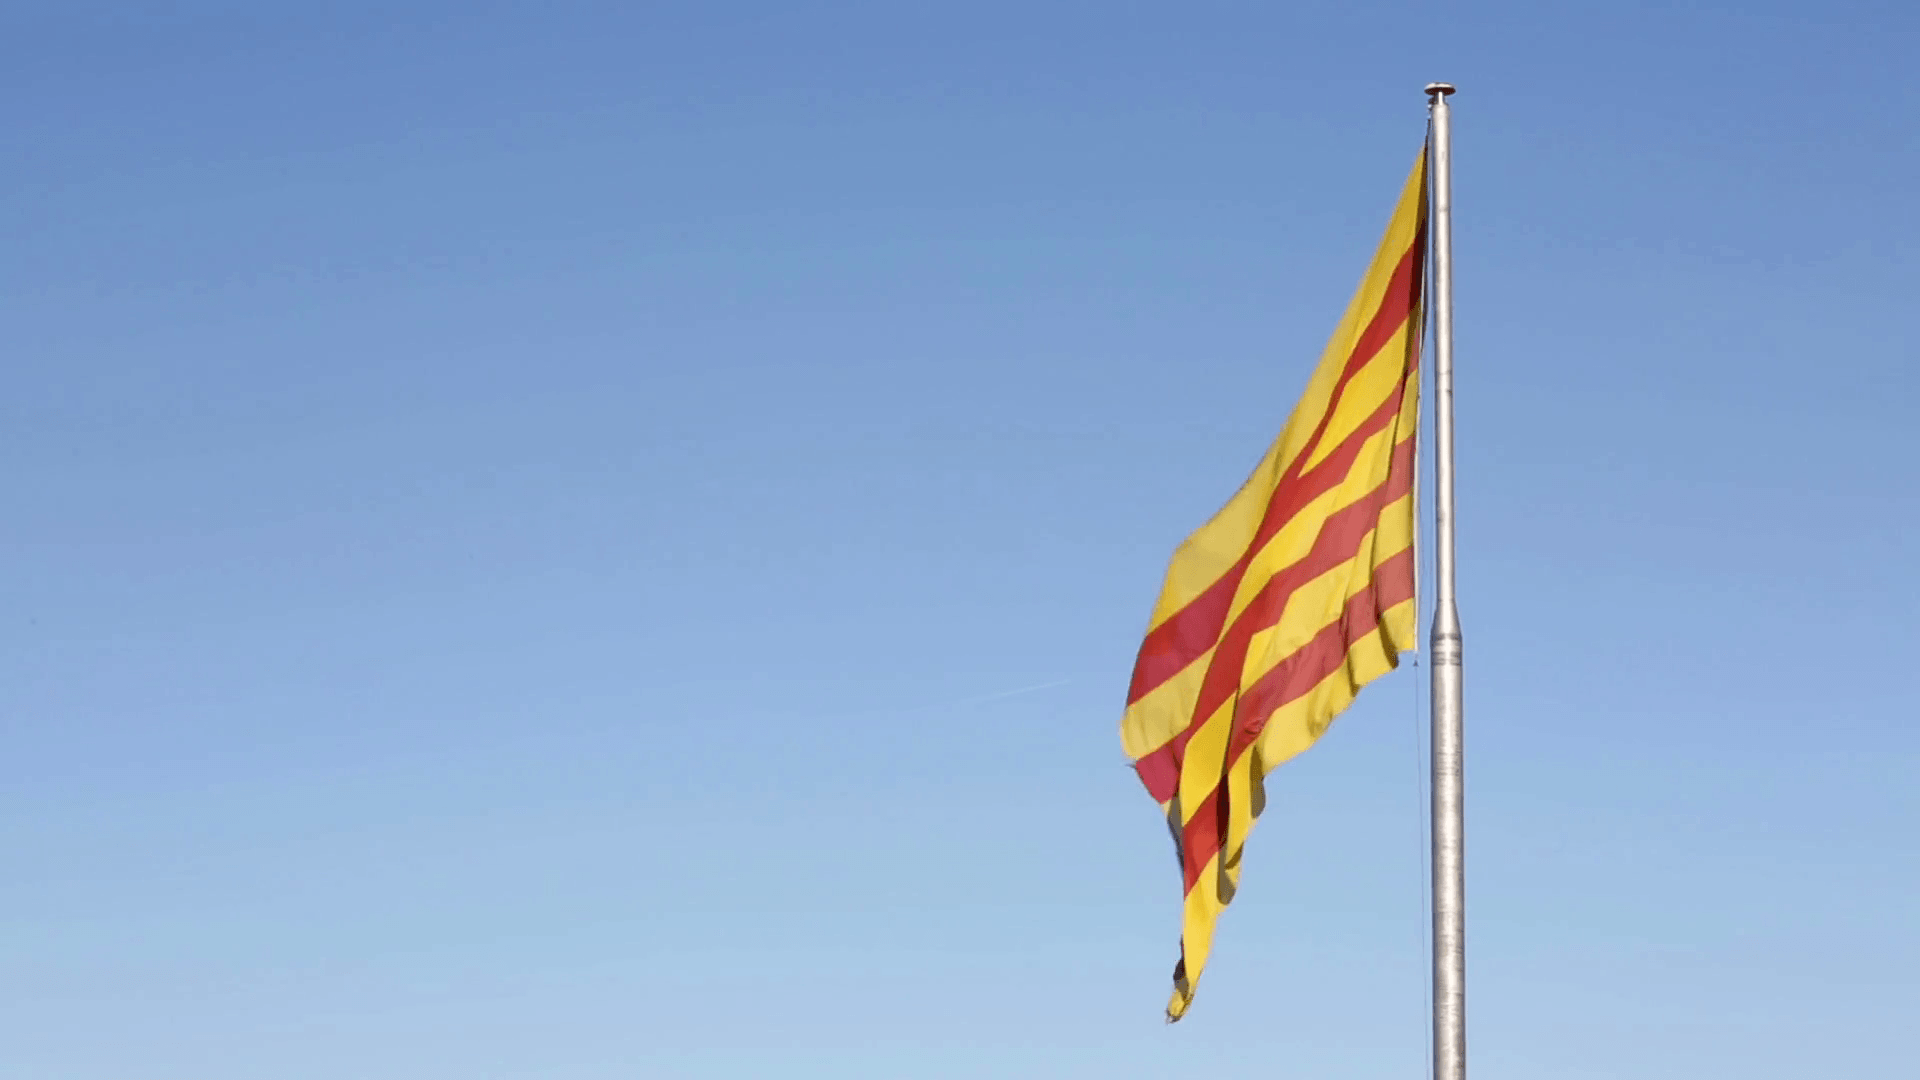 Catalan flag in Catalonia, Barcelona, Spain waving against blue